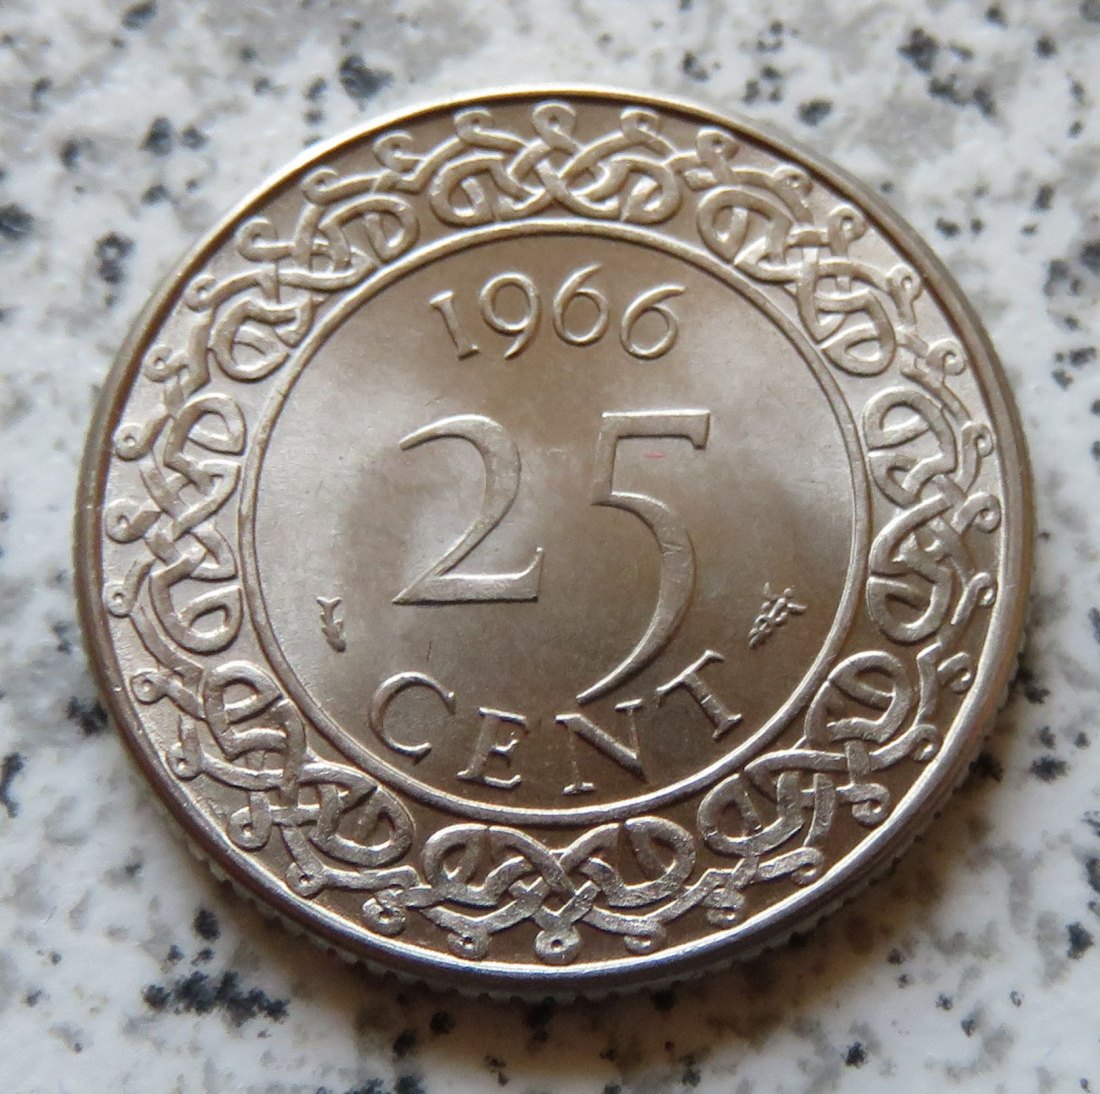  Surinam 25 Cents 1966   